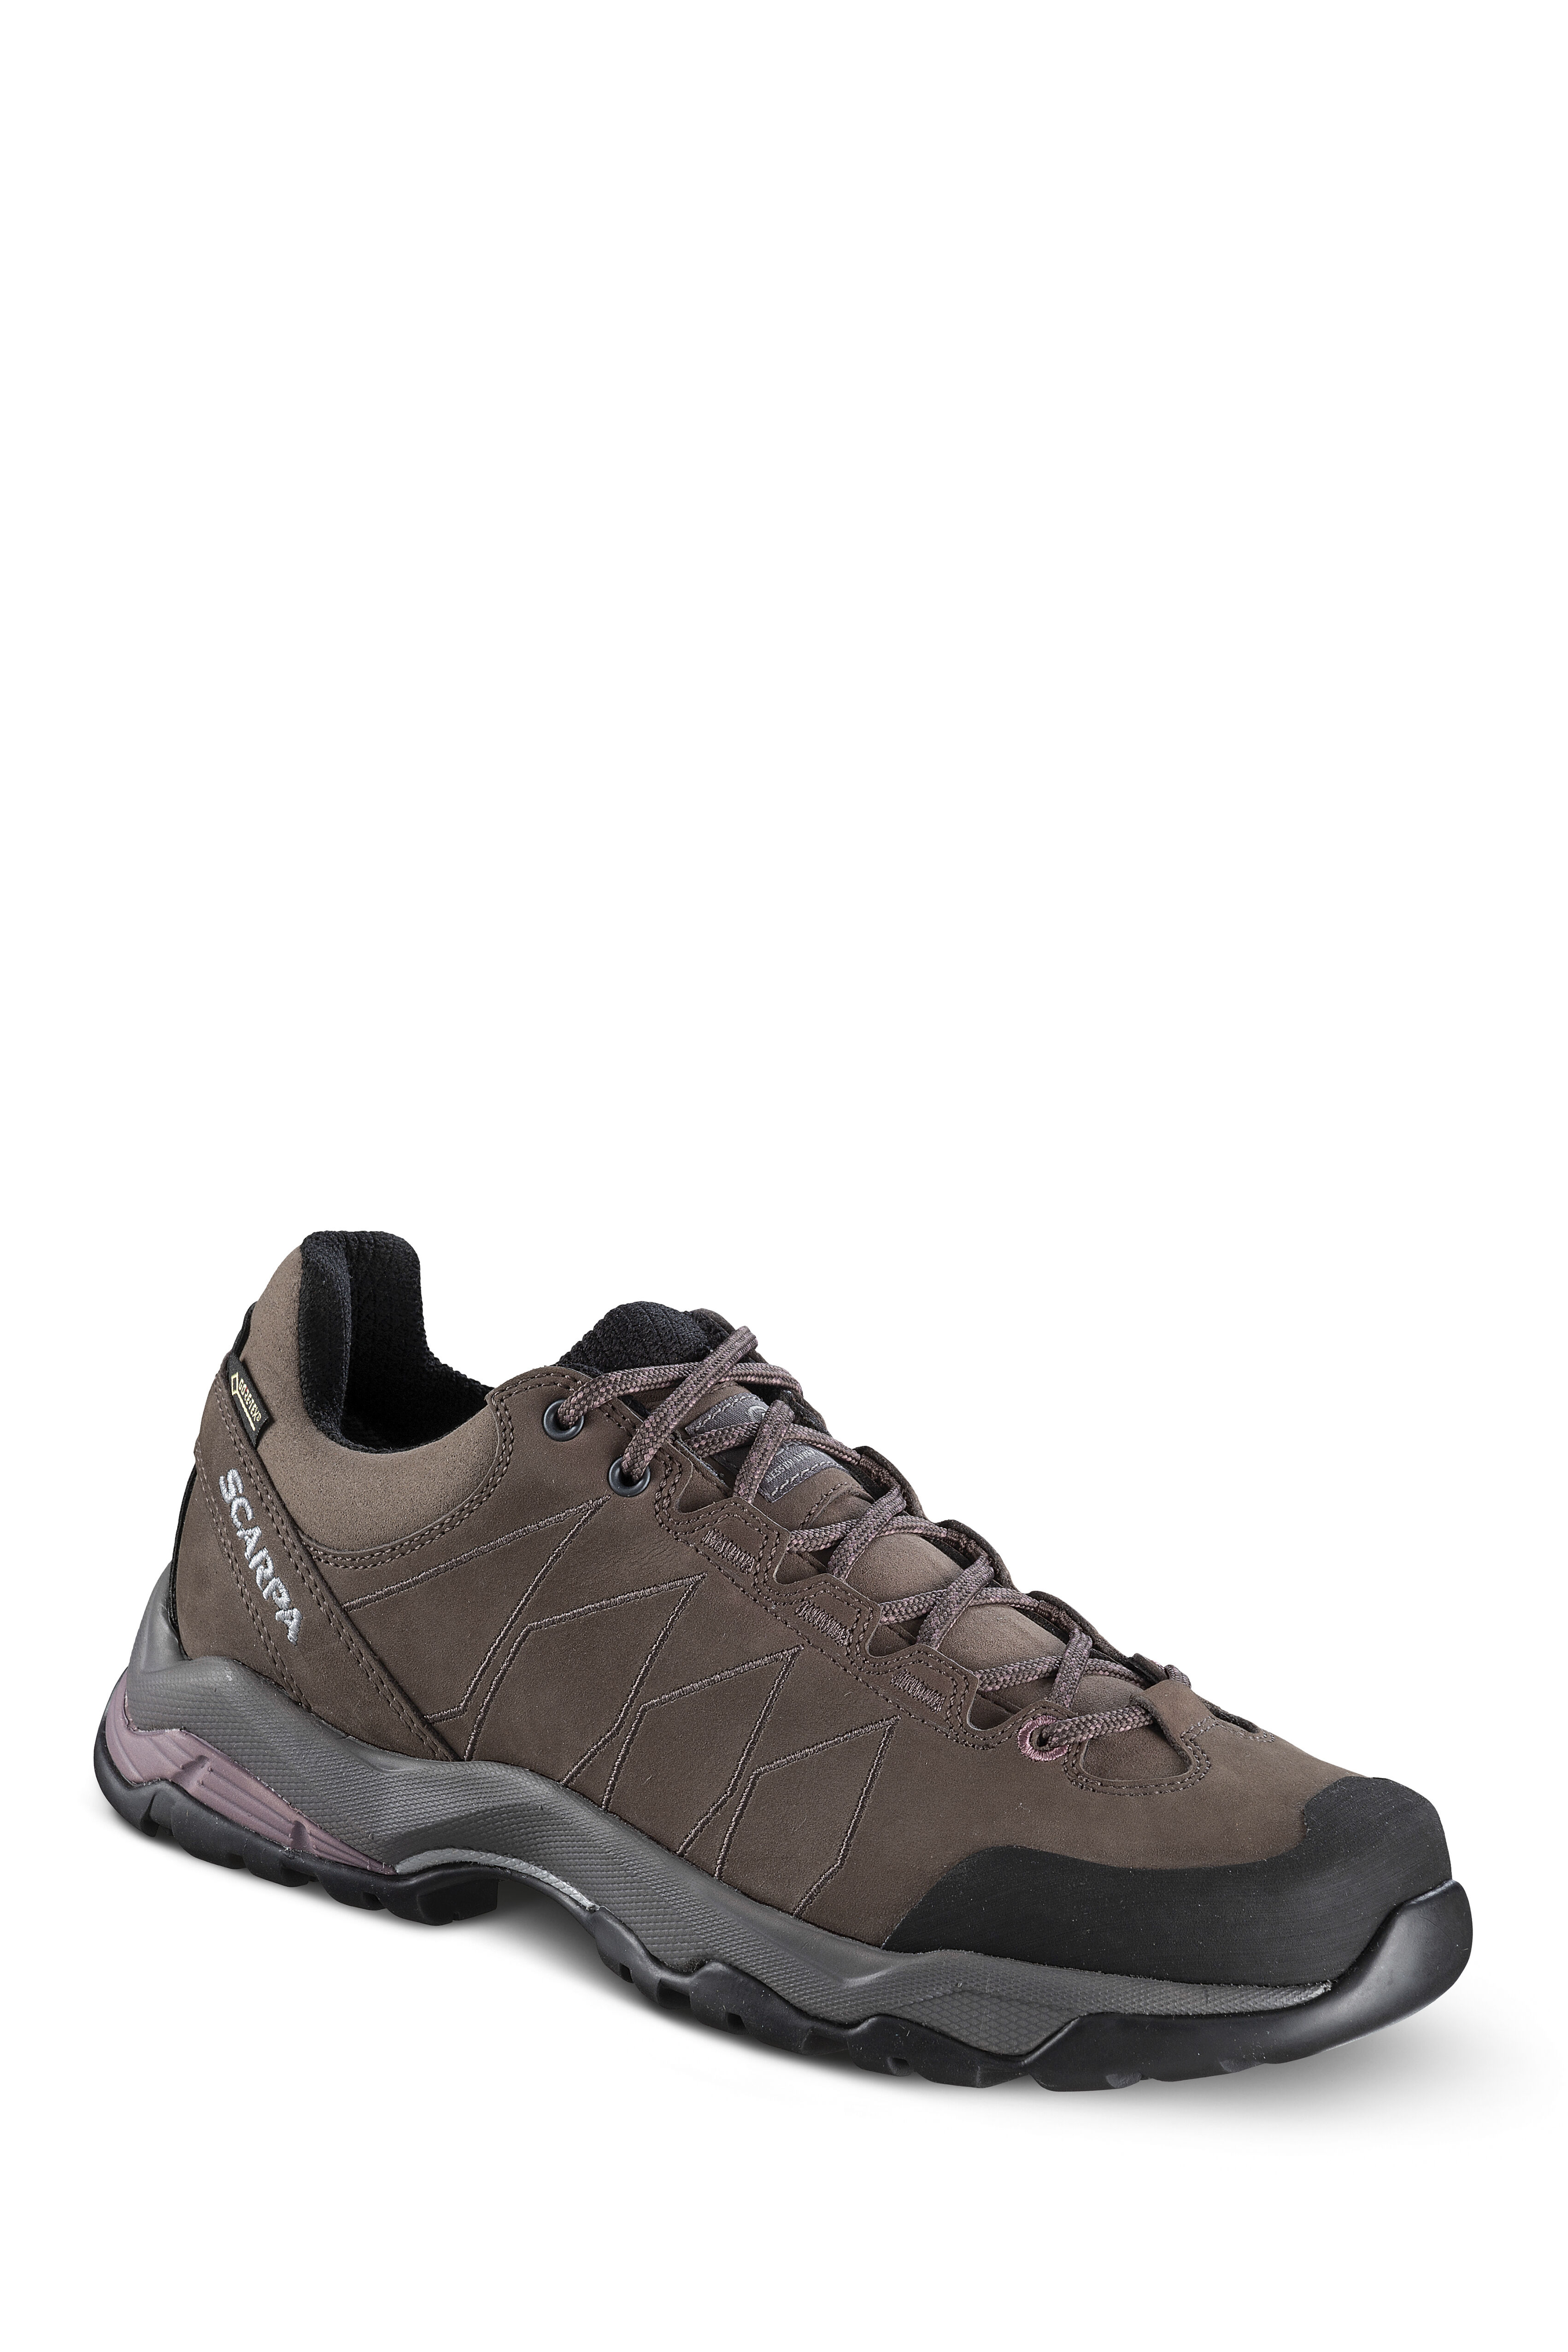 Scarpa Moraine Plus GTX Hiking Shoes 